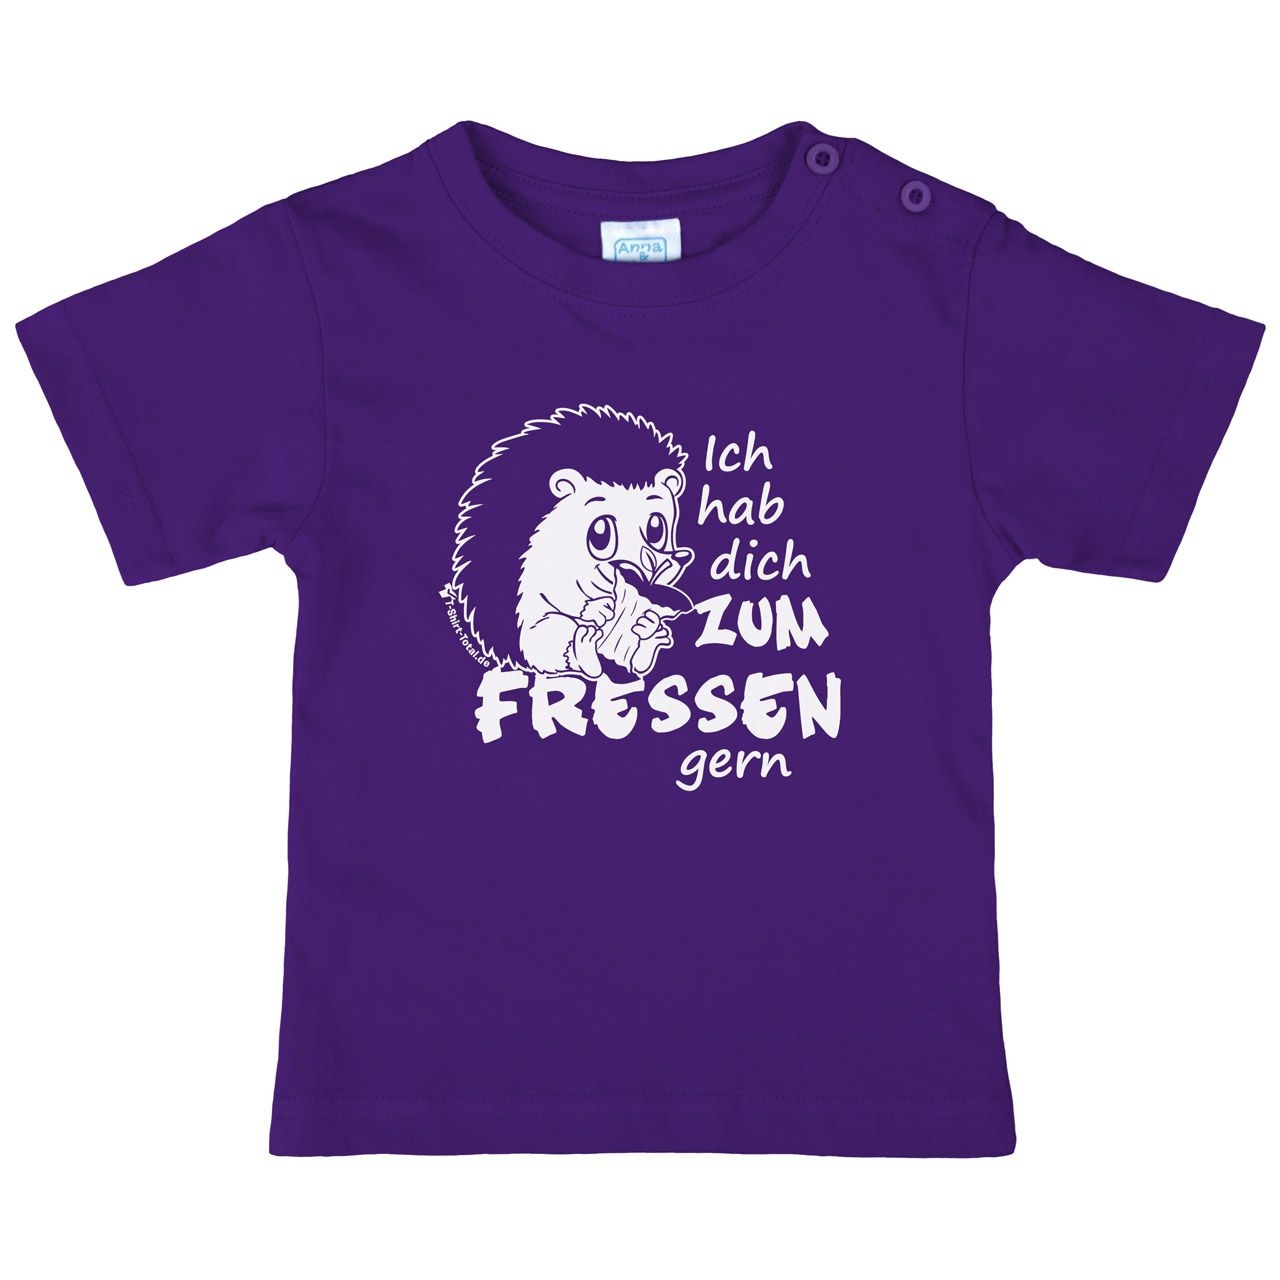 Zum fressen gern Kinder T-Shirt lila 80 / 86